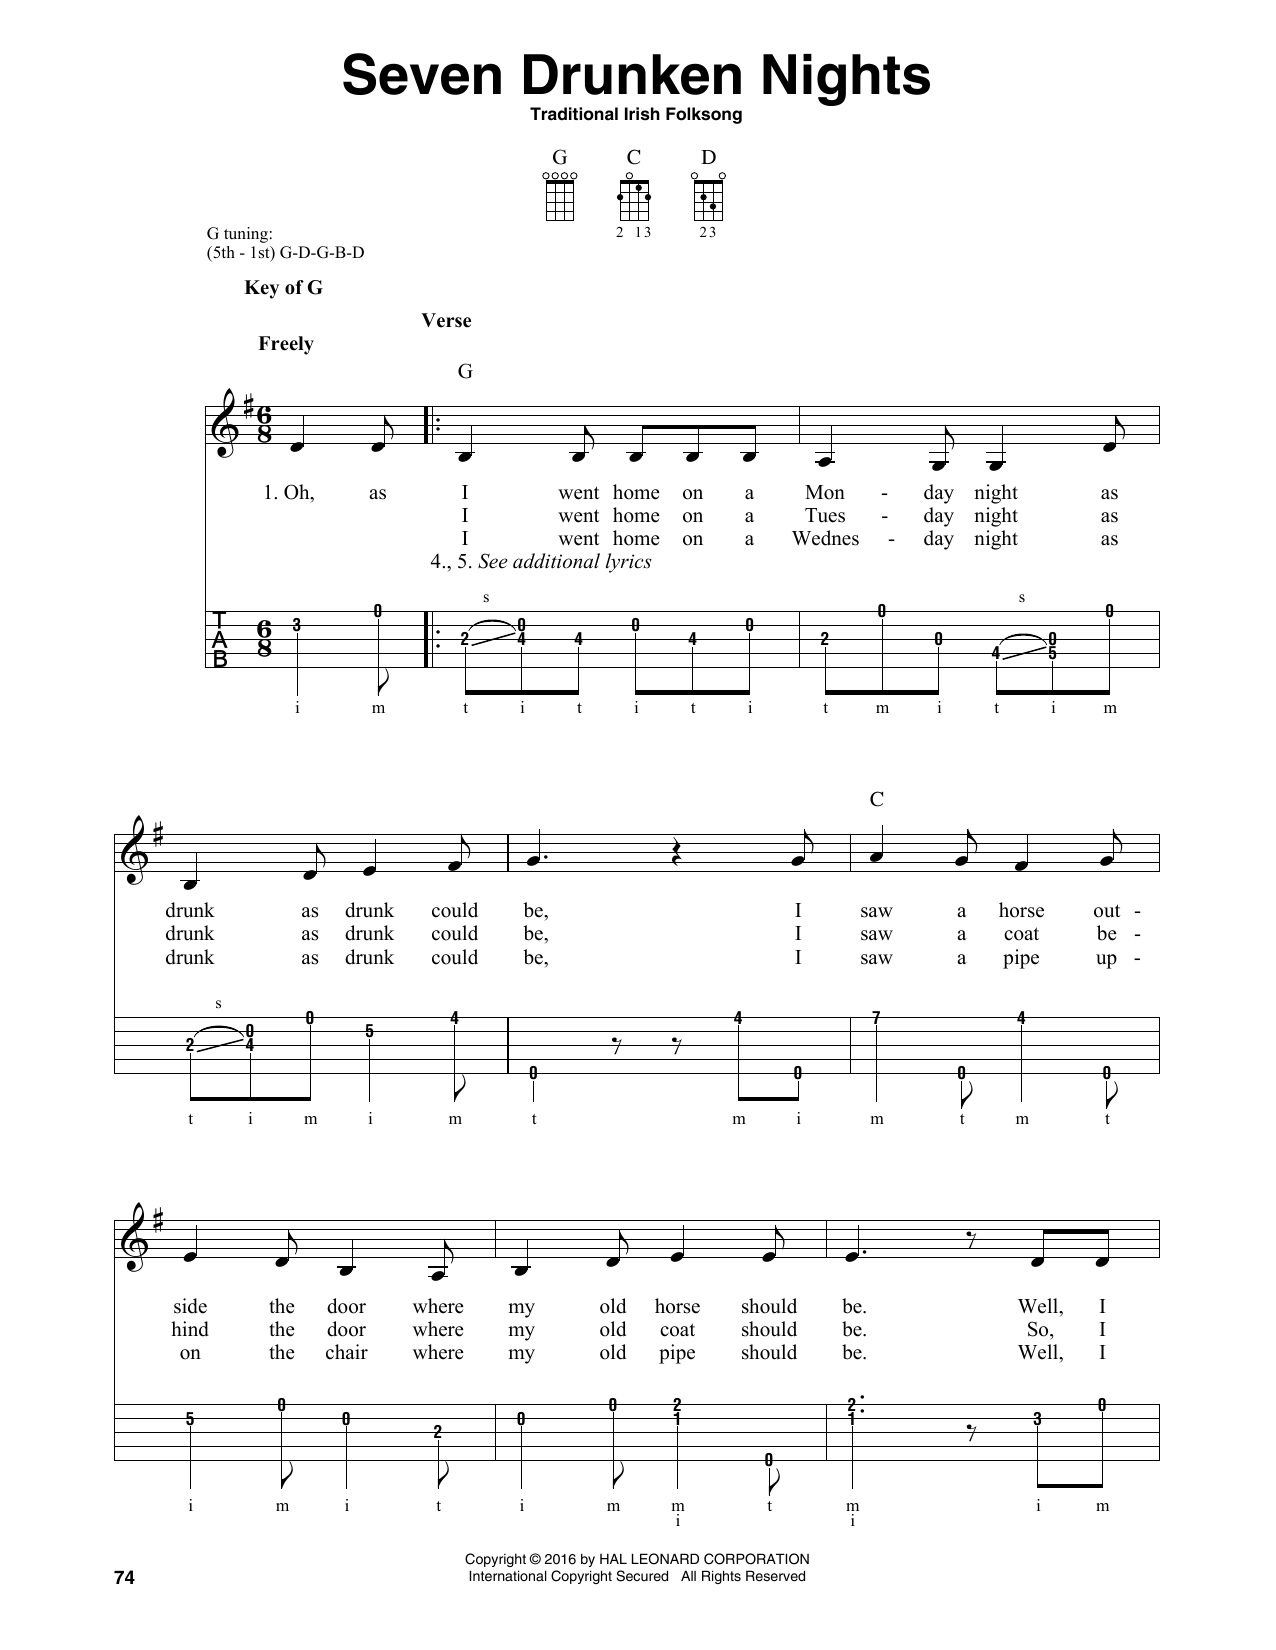 Traditional Irish Folk Song Seven Drunken Nights Sheet Music Notes & Chords for Ukulele - Download or Print PDF